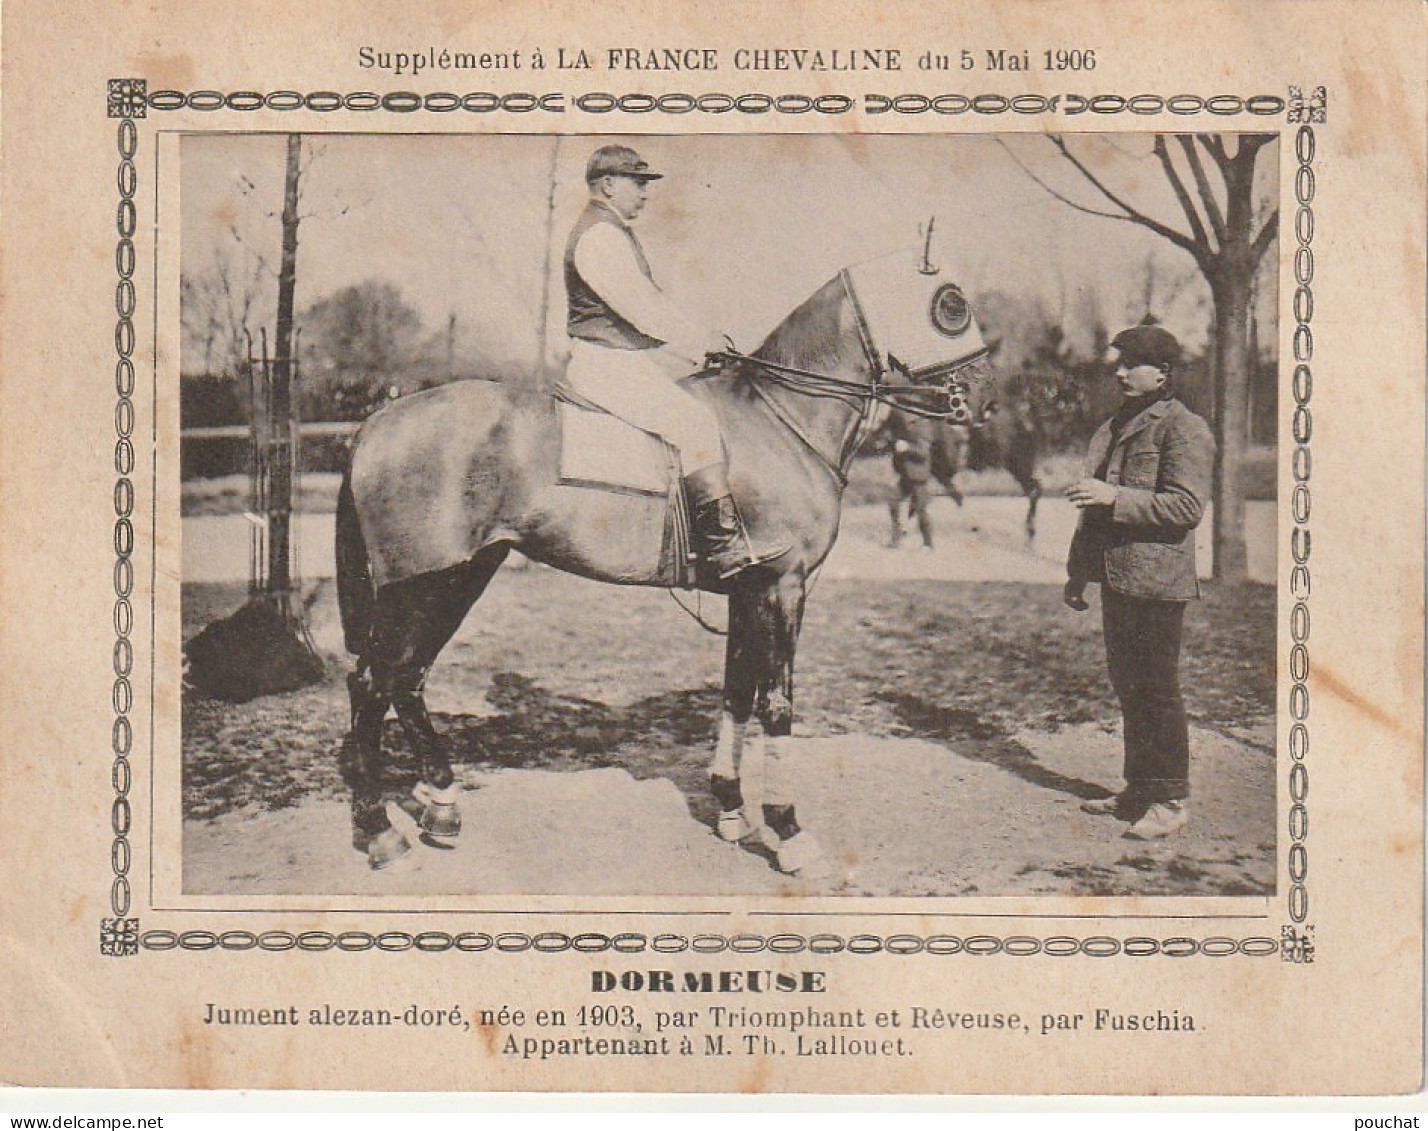 AA+ - " DORMEUSE " - JUMENT ALEZAN APPARTENANT A M. TH. LALLOUET - SUPPL. " FRANCE CHEVALINE " MAI 1906 - Paardensport